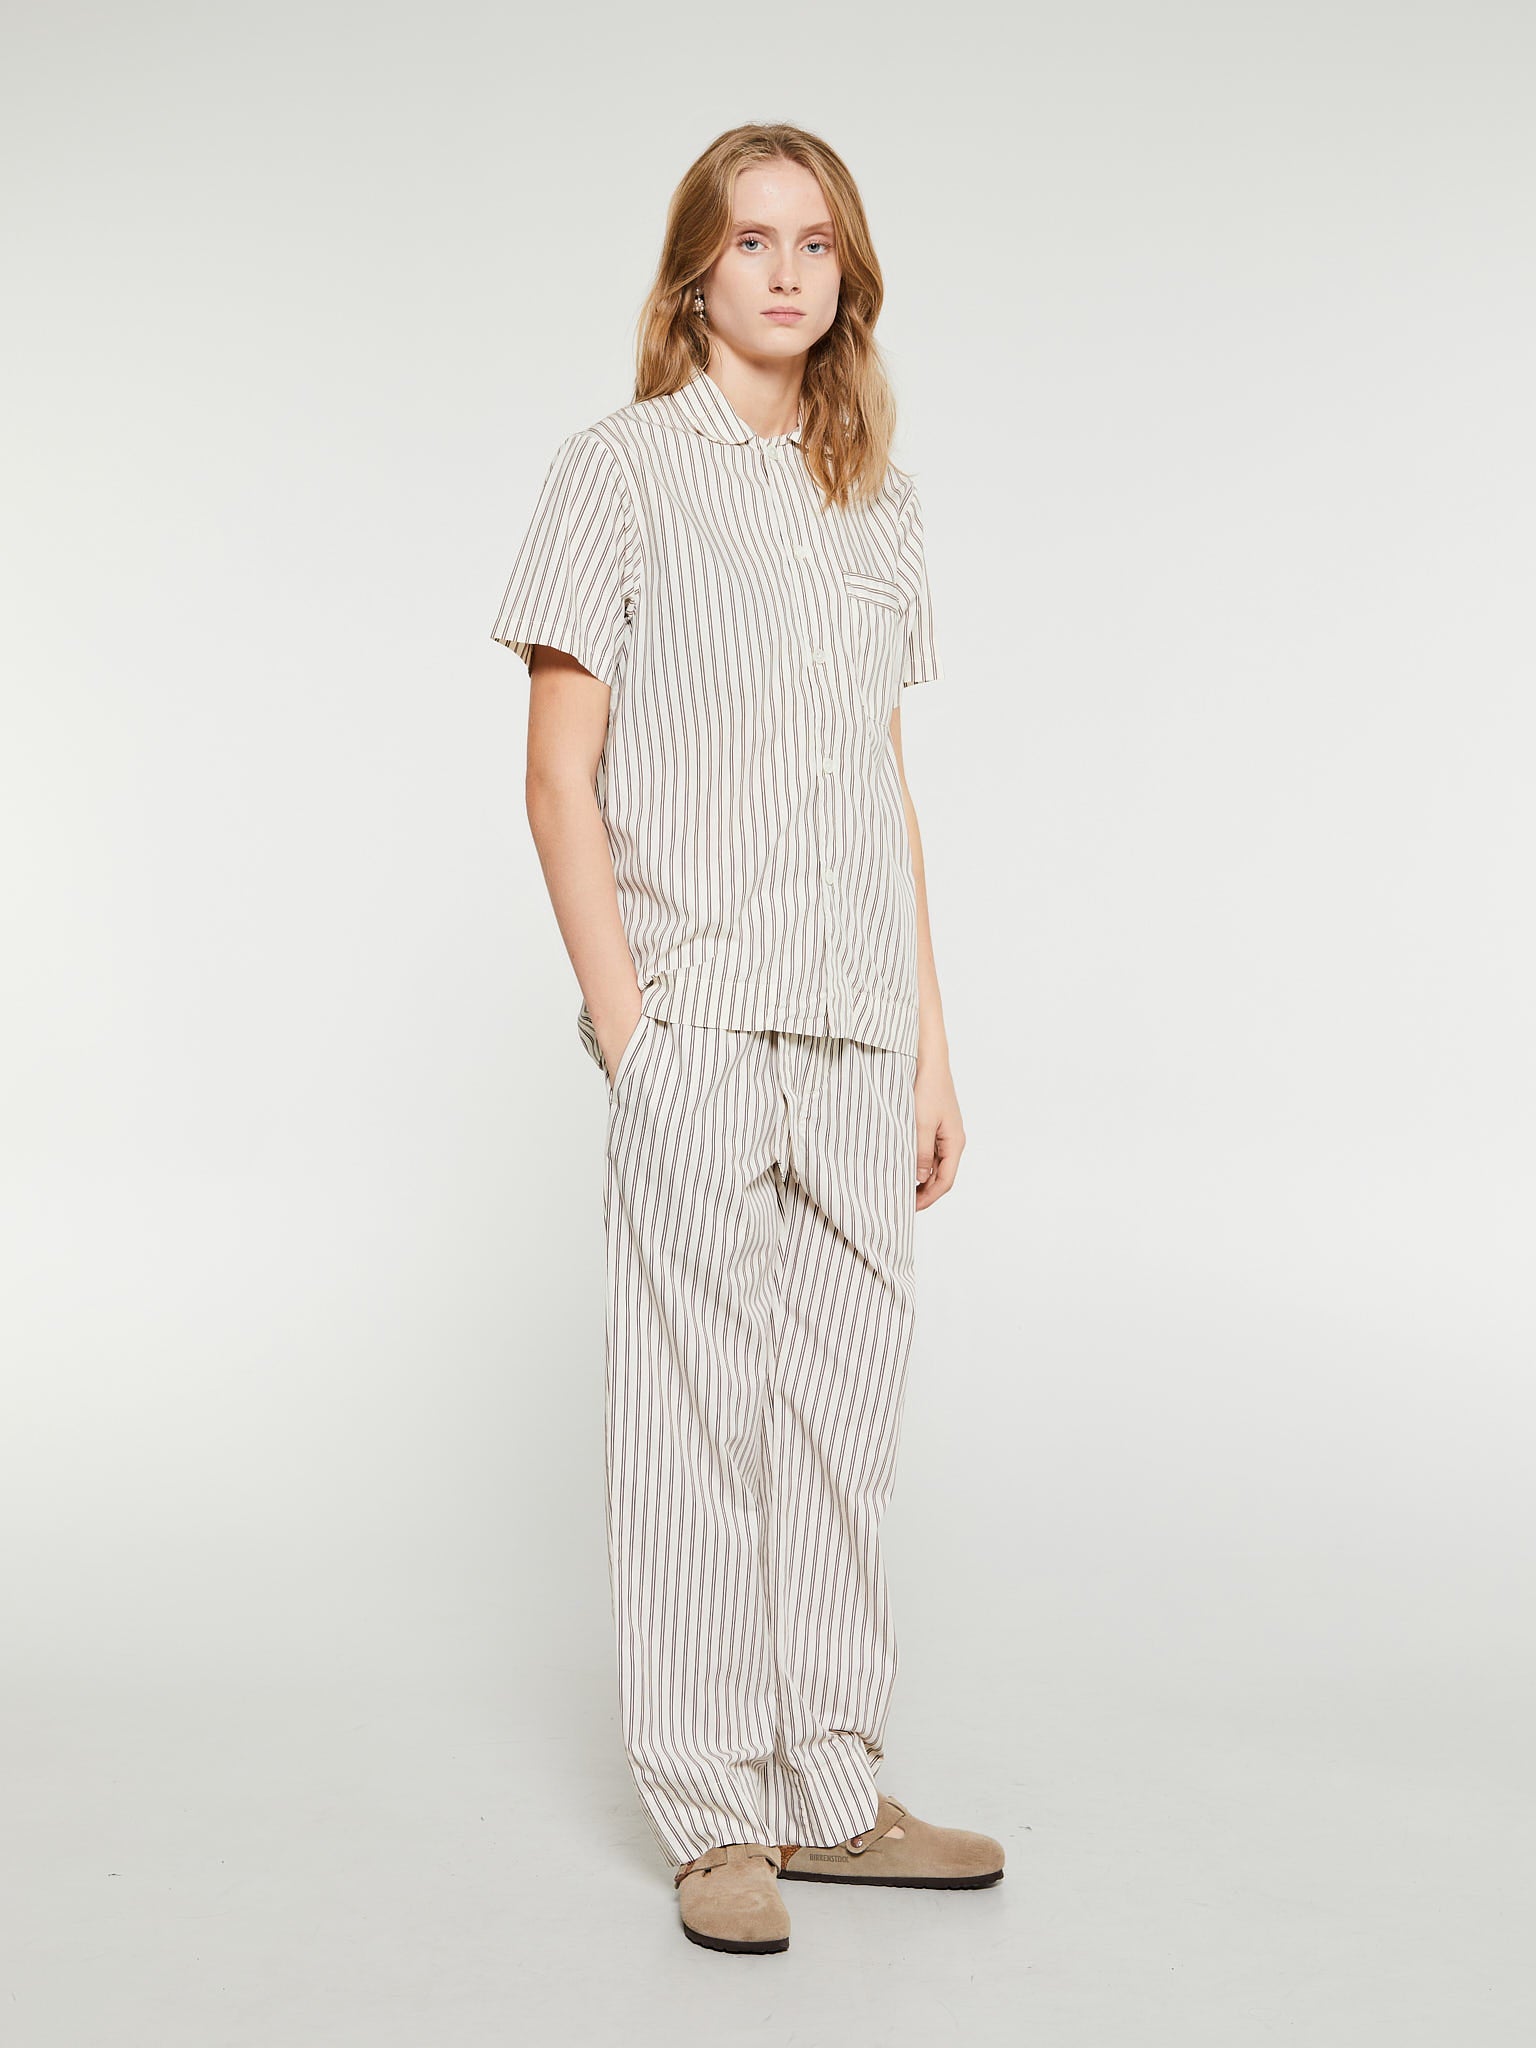 Poplin Pyjamas Short Sleeve in Hopper Stripes